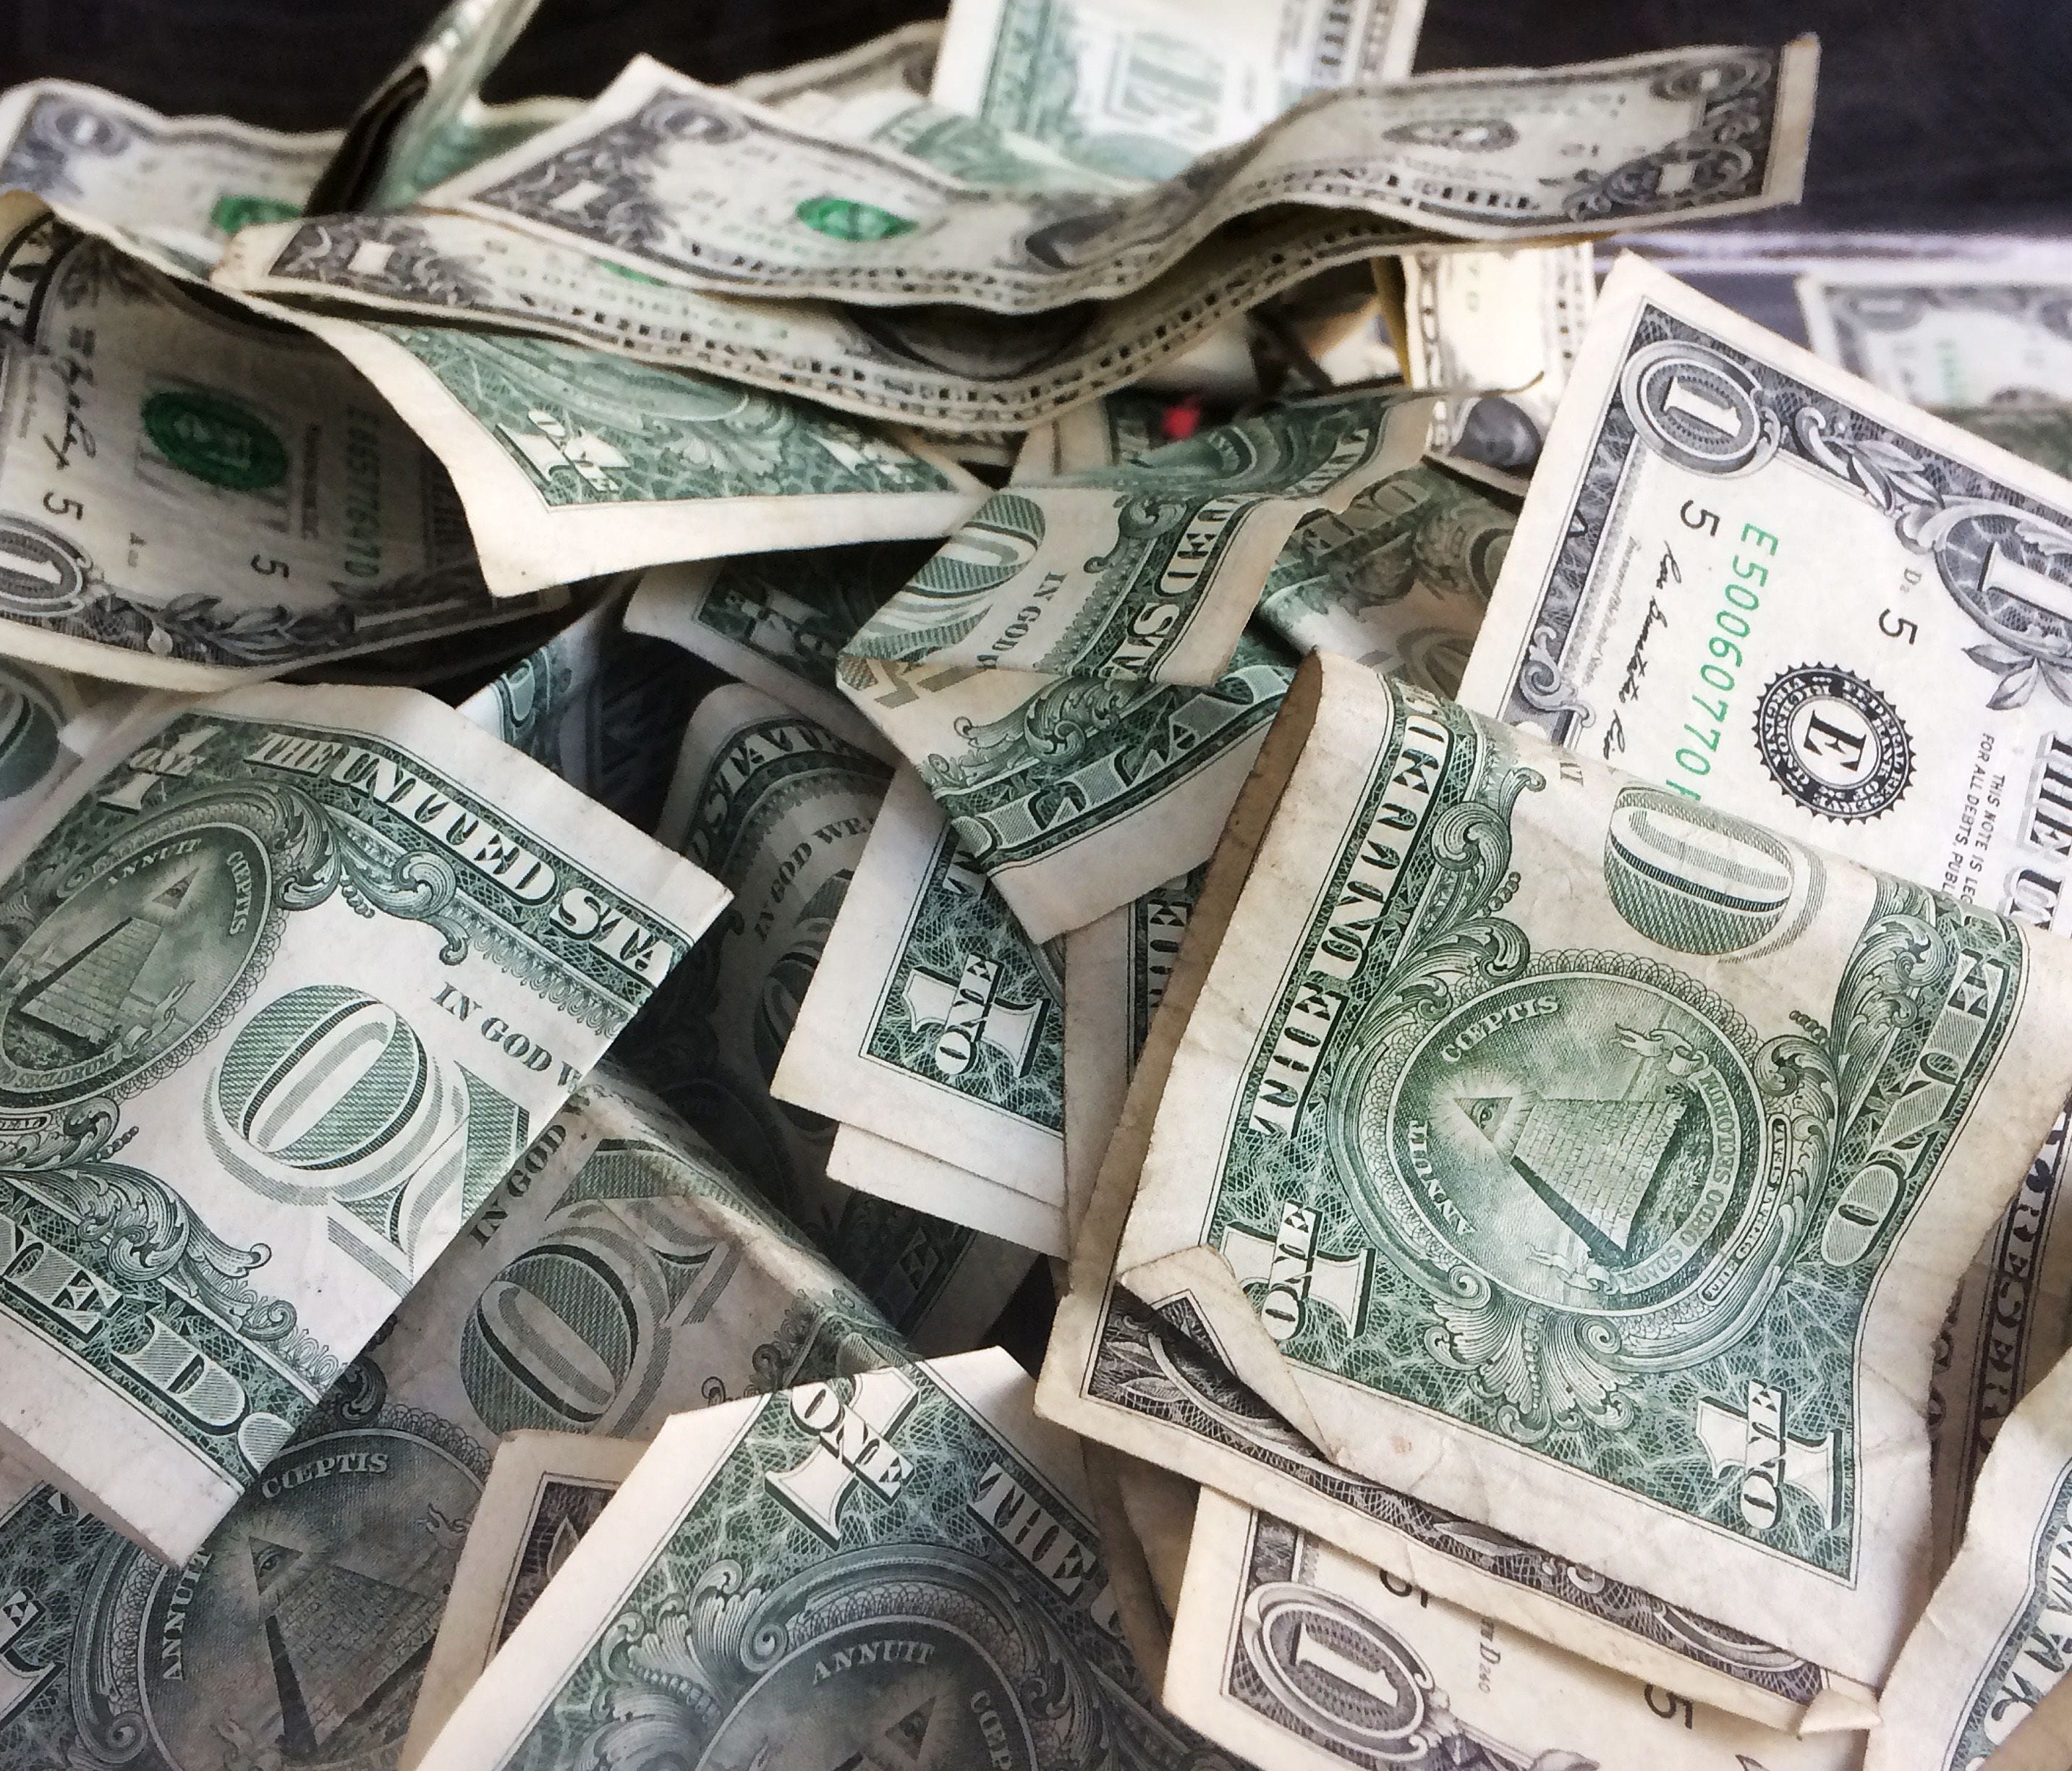 One dollar bills have been dropped into a tip jar at a car wash in Brooklyn, N.Y.